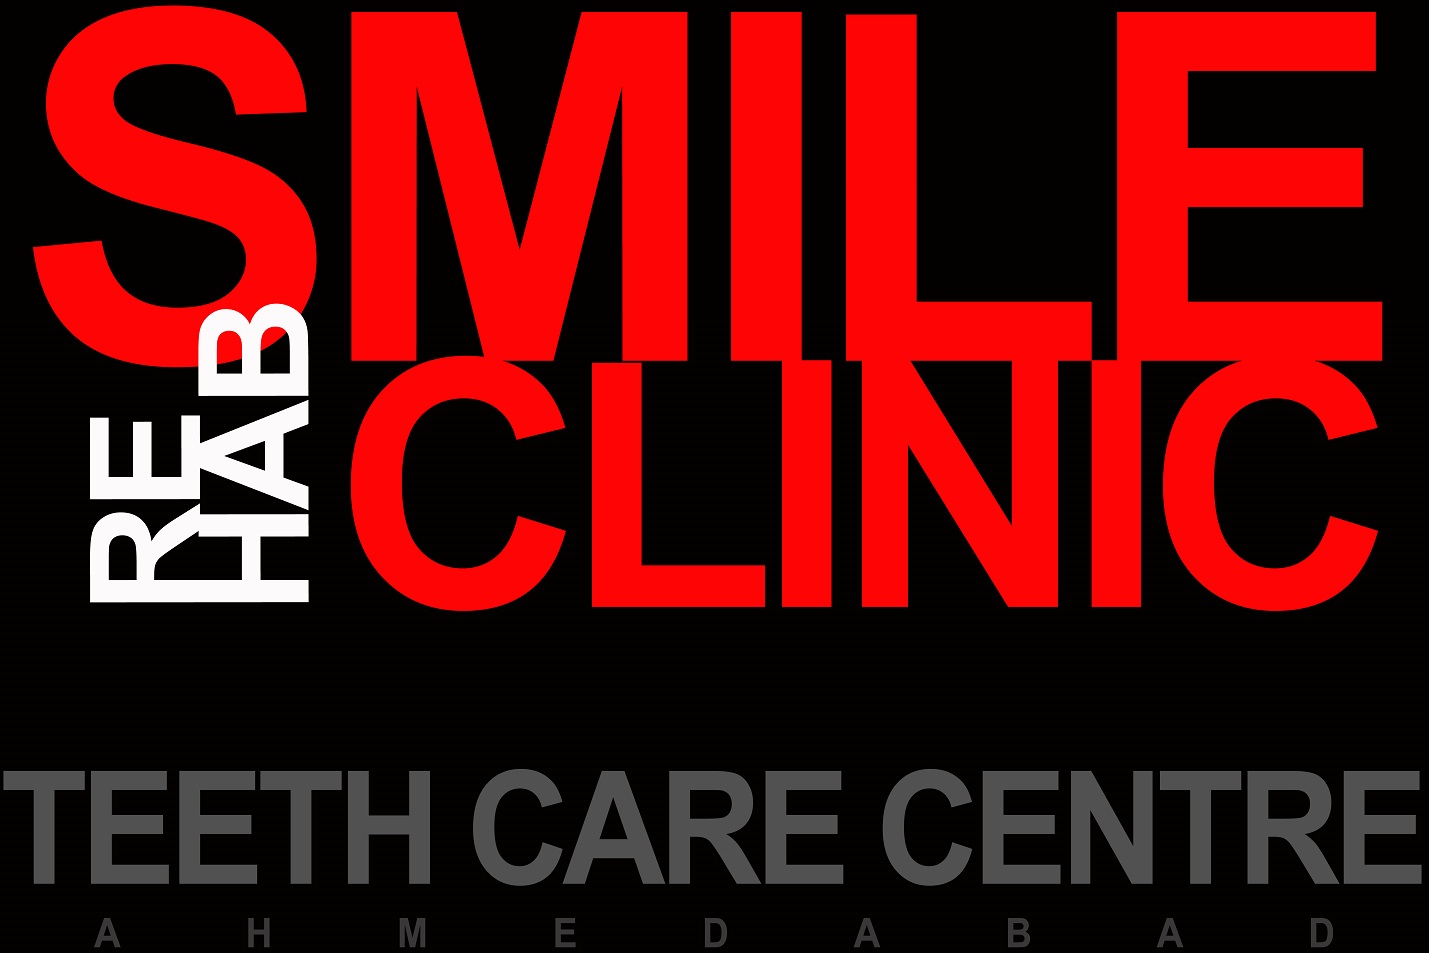 SMILE REHAB CLINIC AHMEDABAD smile rehabilitation clinic TEETH CARE CENTRE